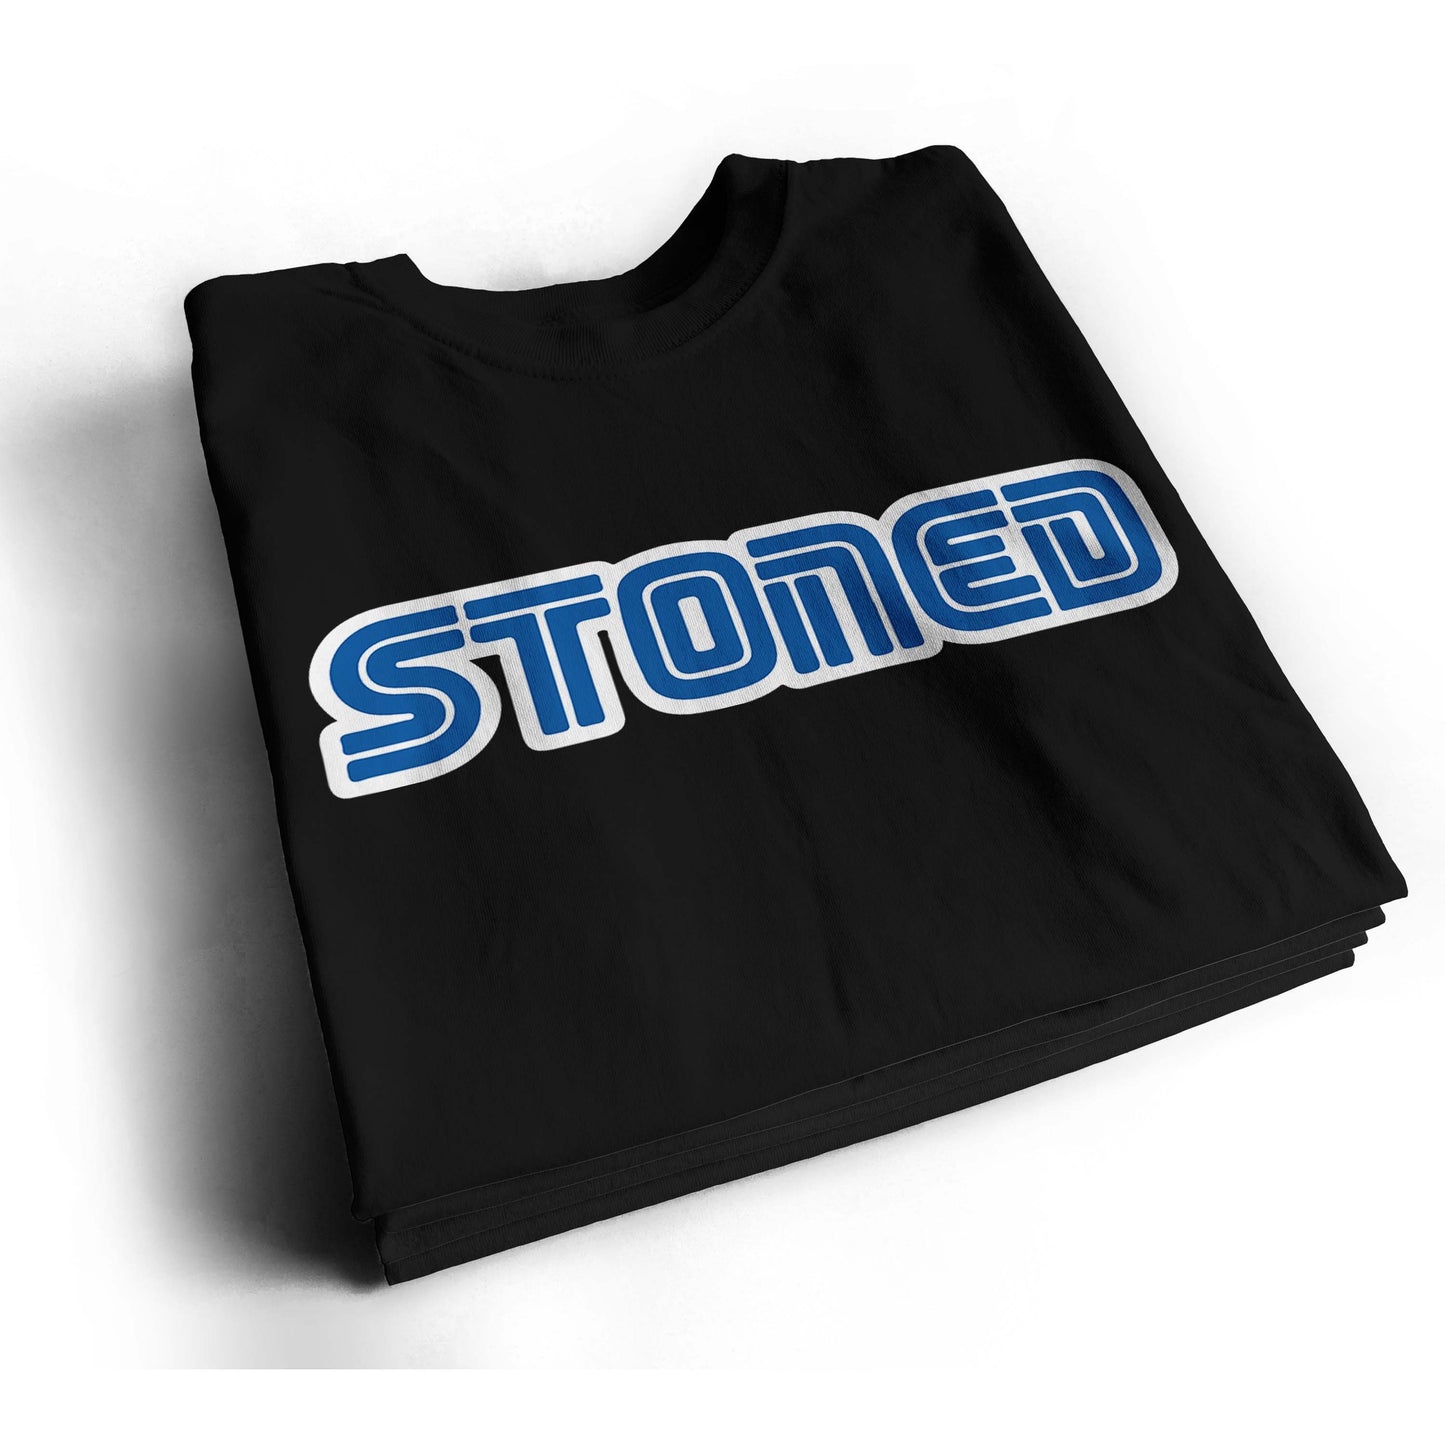 Stoned - Black